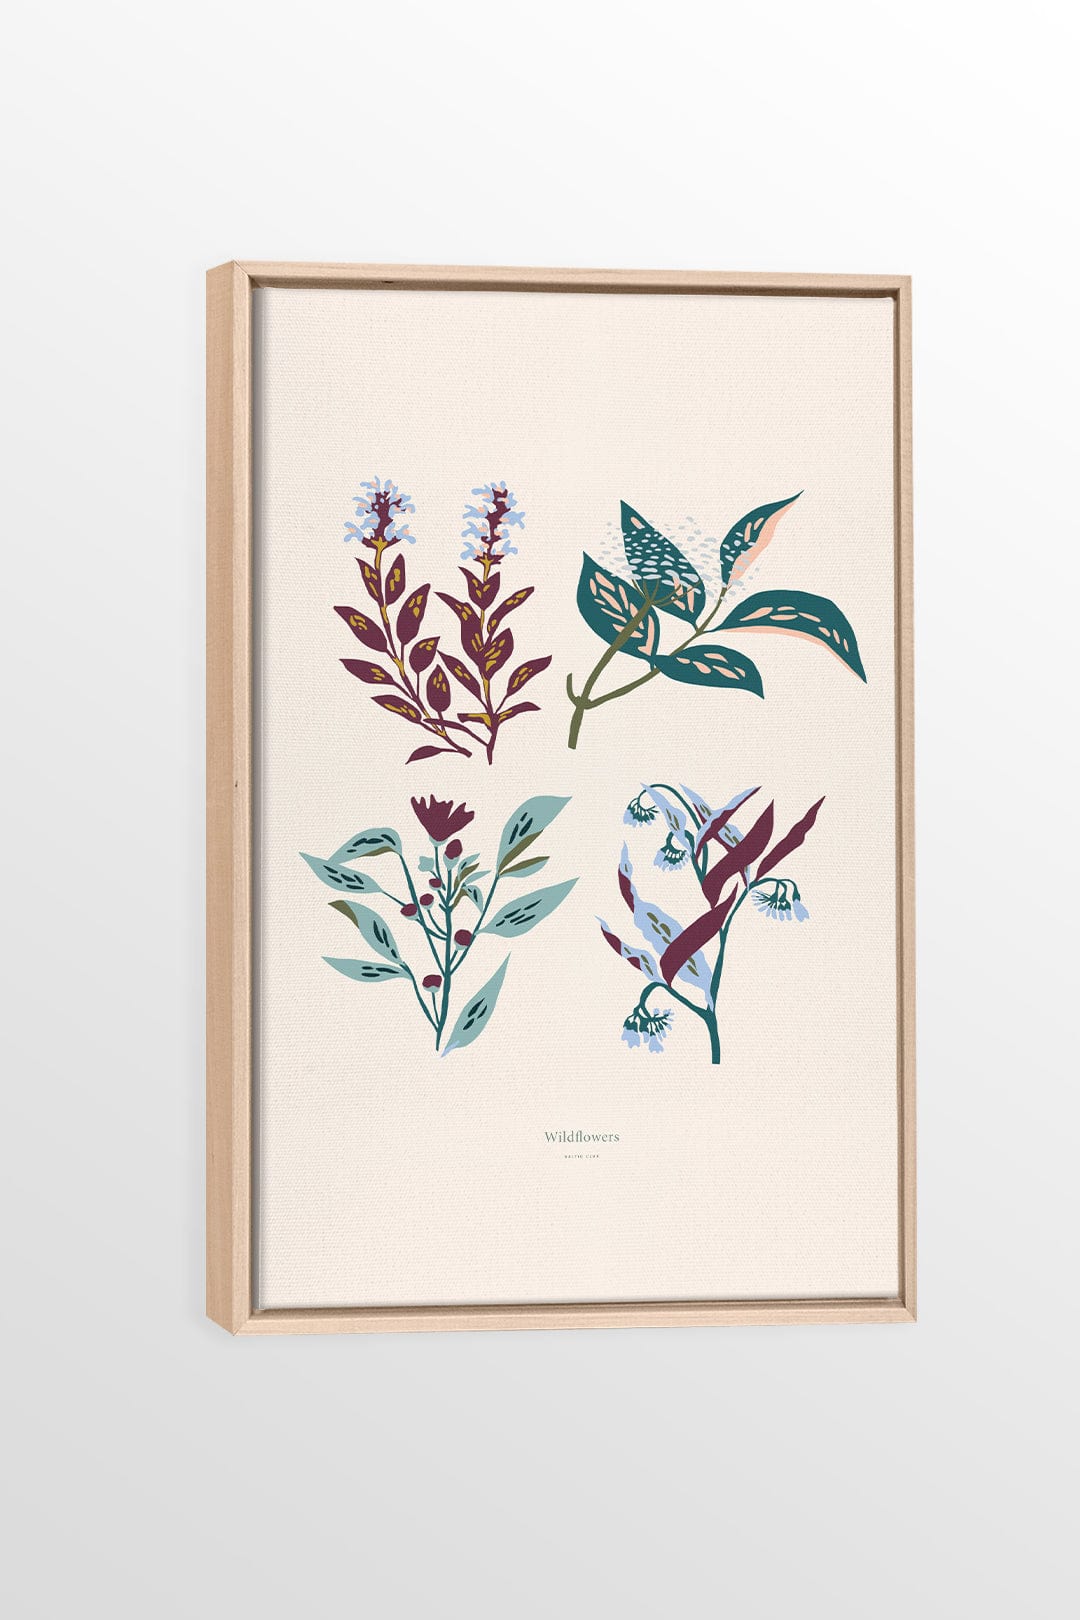 Wildflowers - Printed illustration on canvas